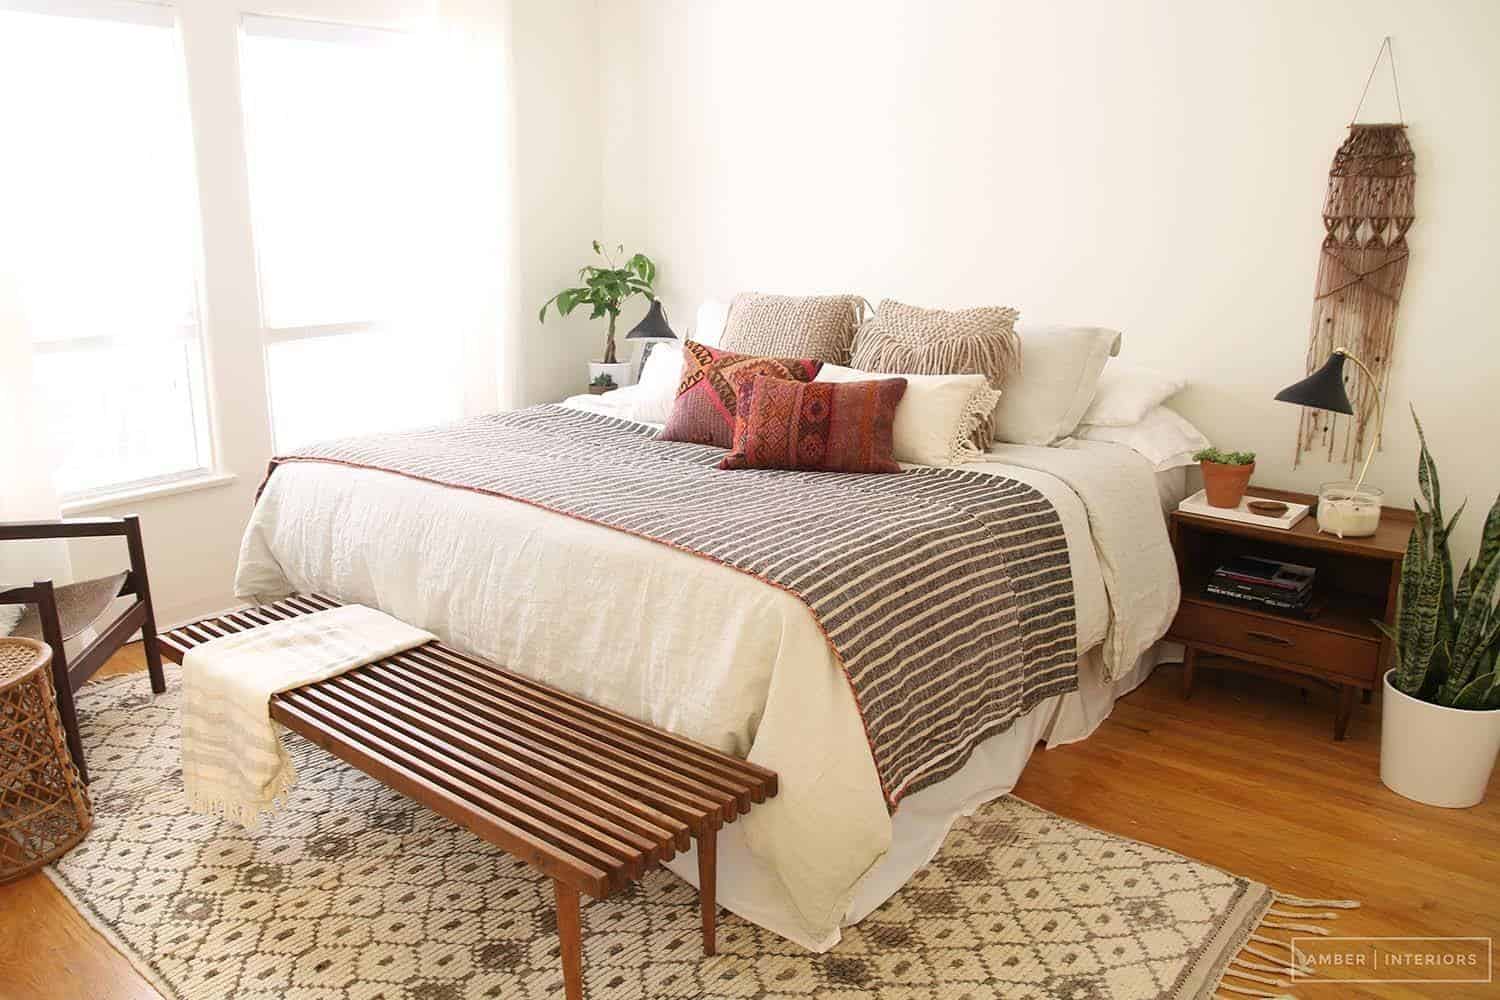  Mid Century Modern Bedroom Ideas with Simple Decor